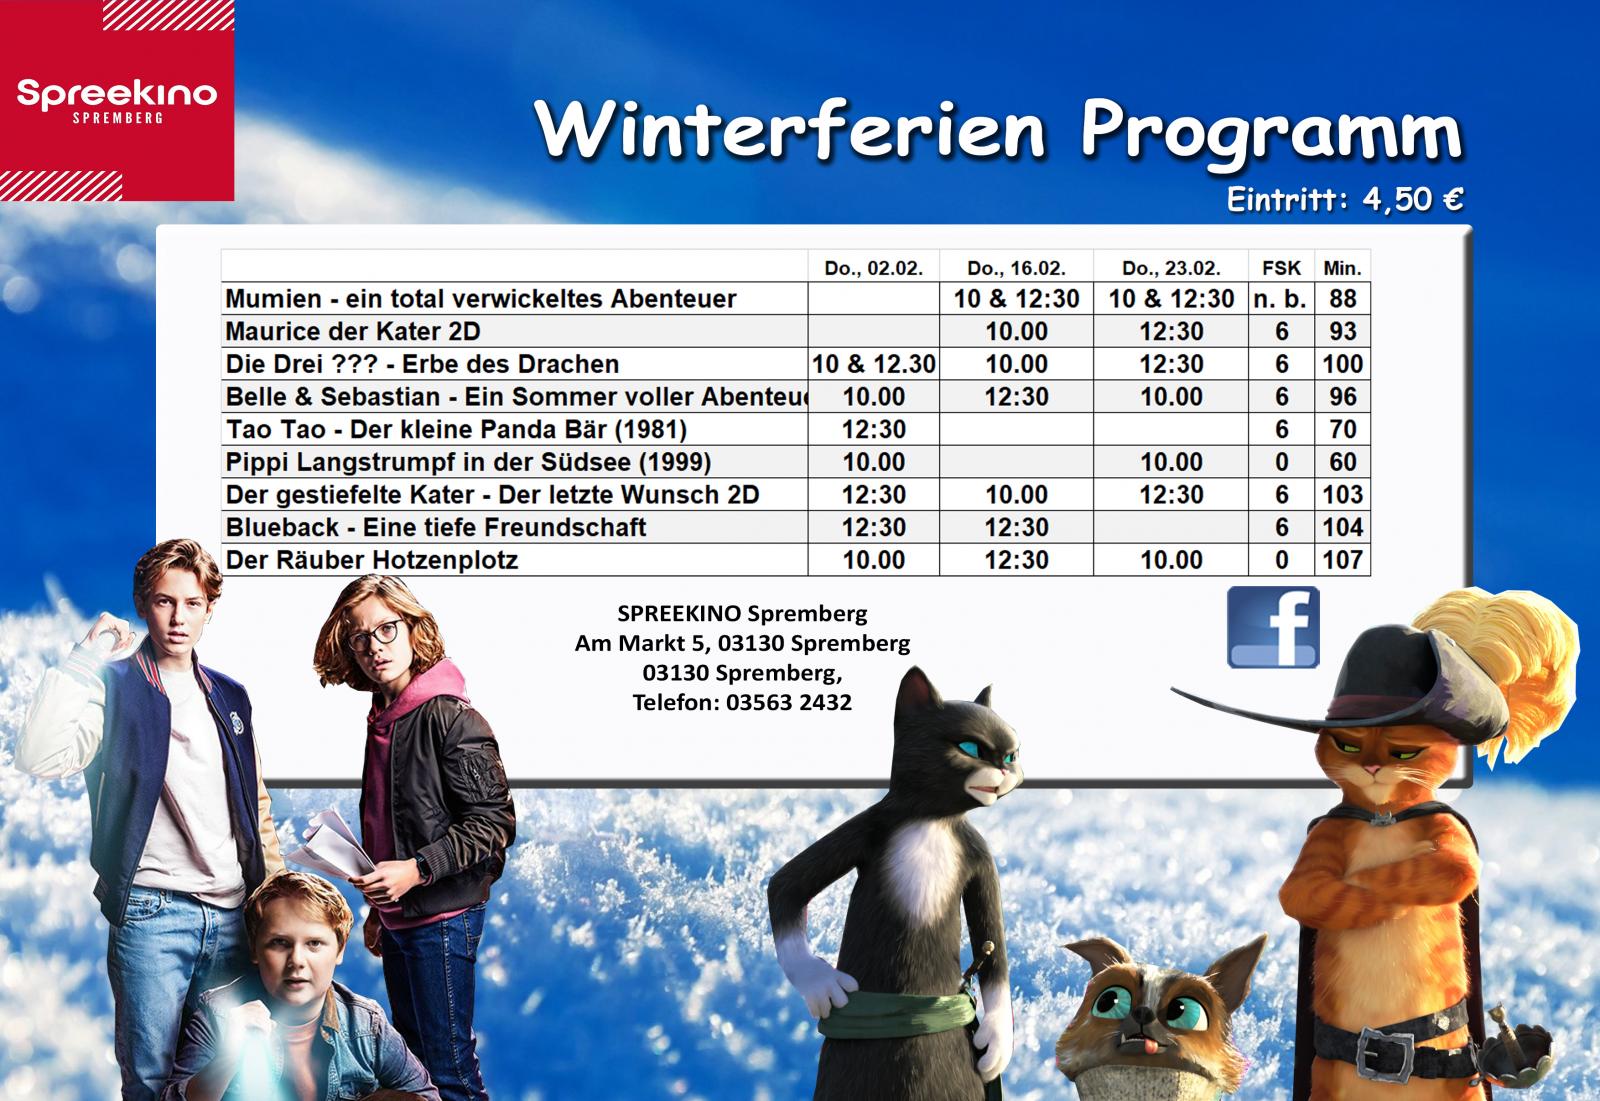 Winterferienprogramm